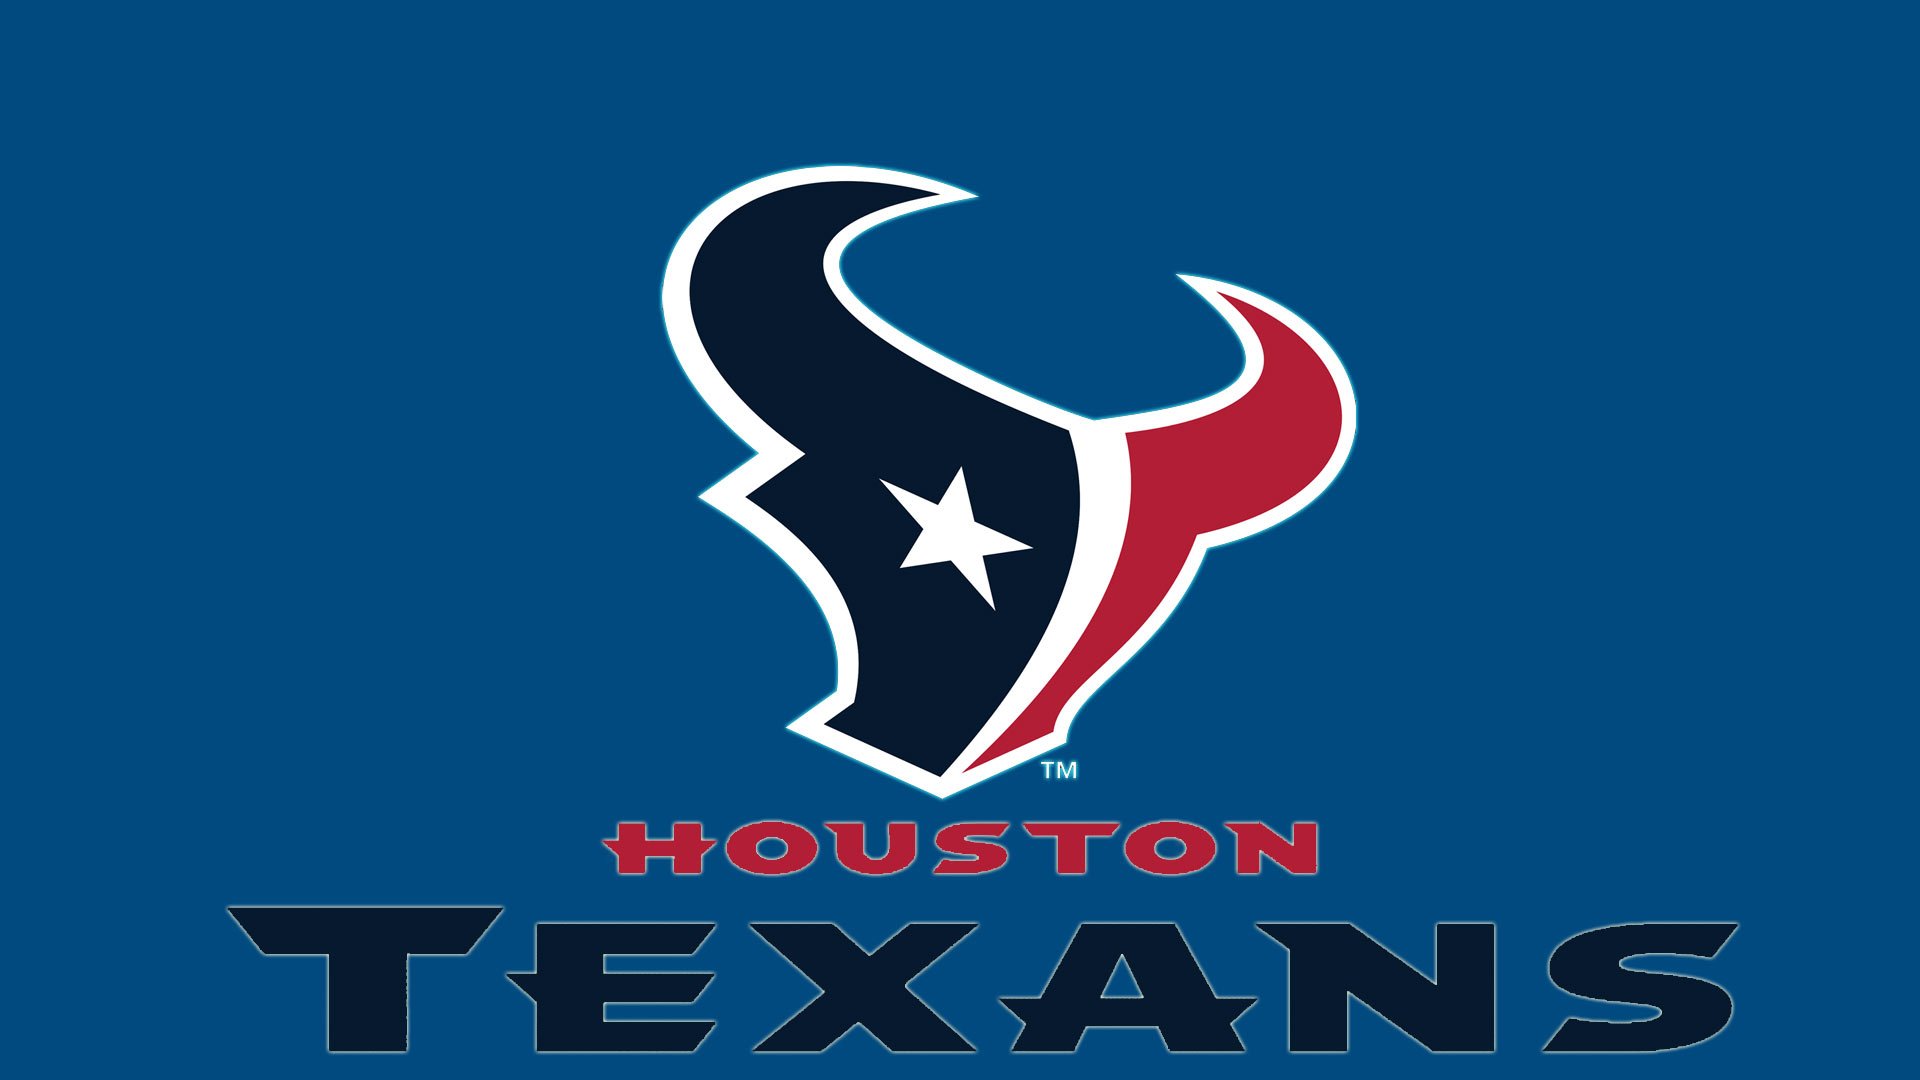 Houston Texans logo wallpaper